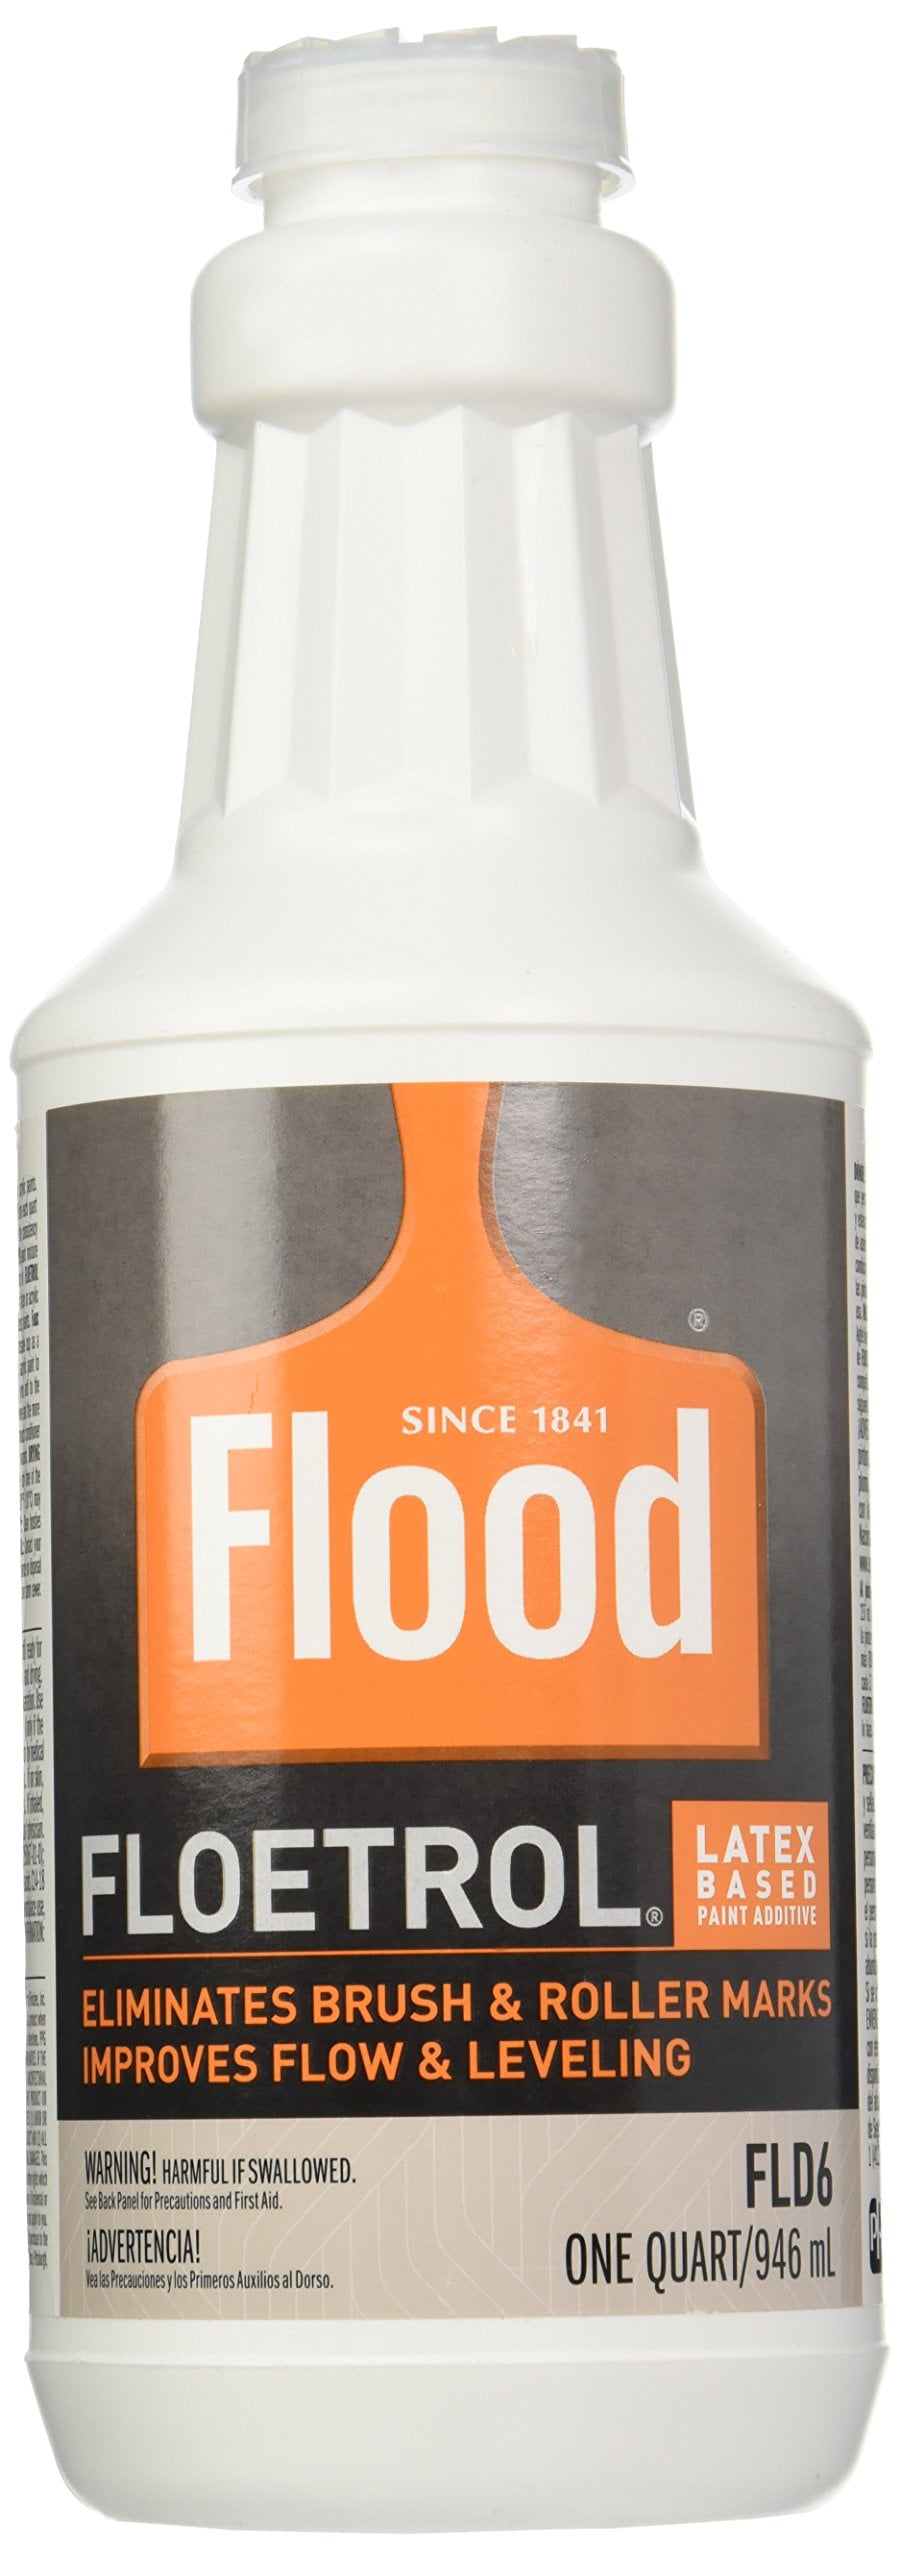 Flood FLD6-04 Floetrol Latex Paint Additive, 1 Quart